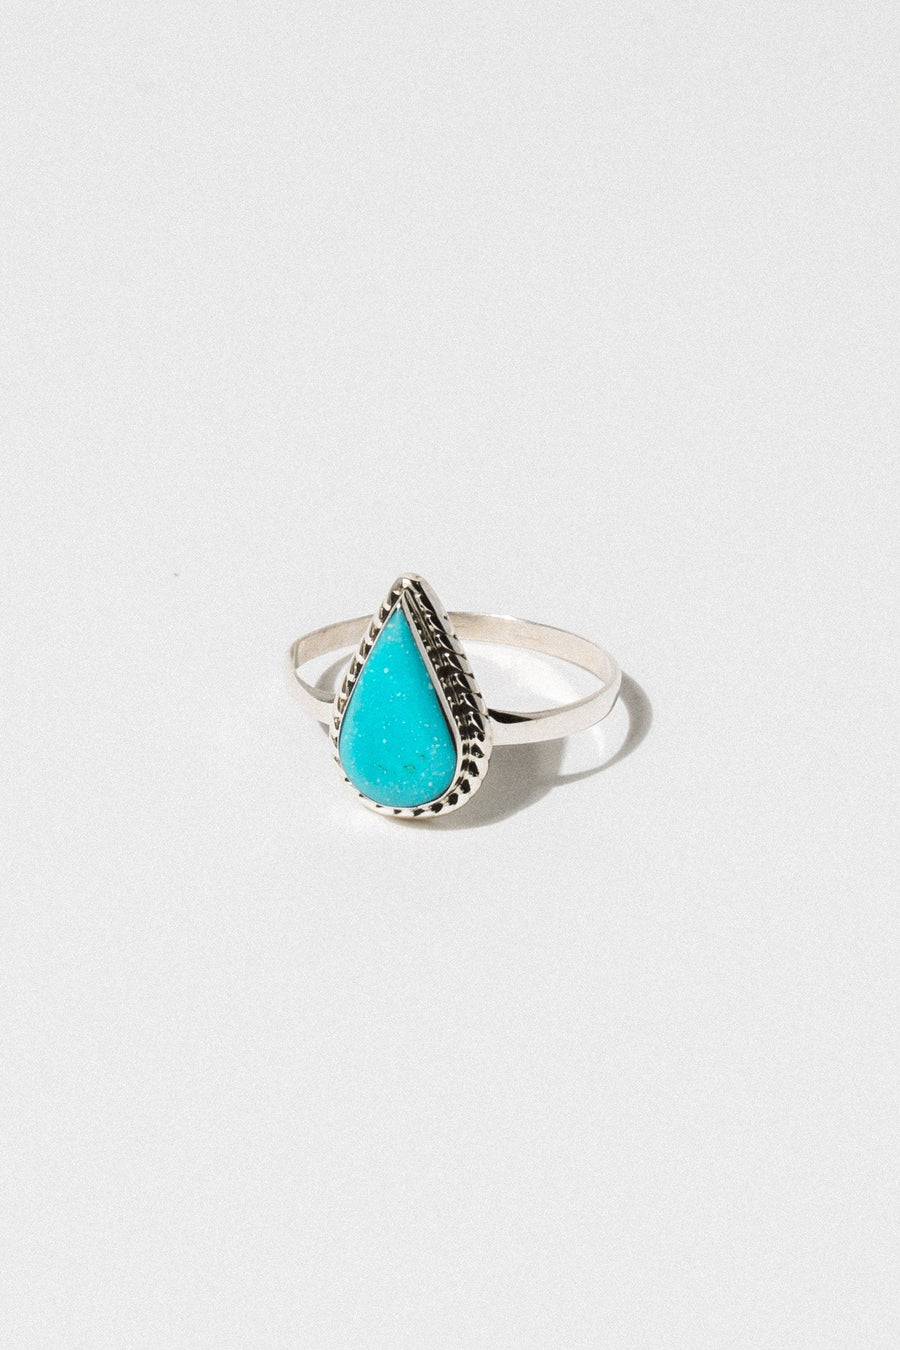 Thunderbird Jewelry Jewelry US 5 / Silver Tear Drop Navajo Ring